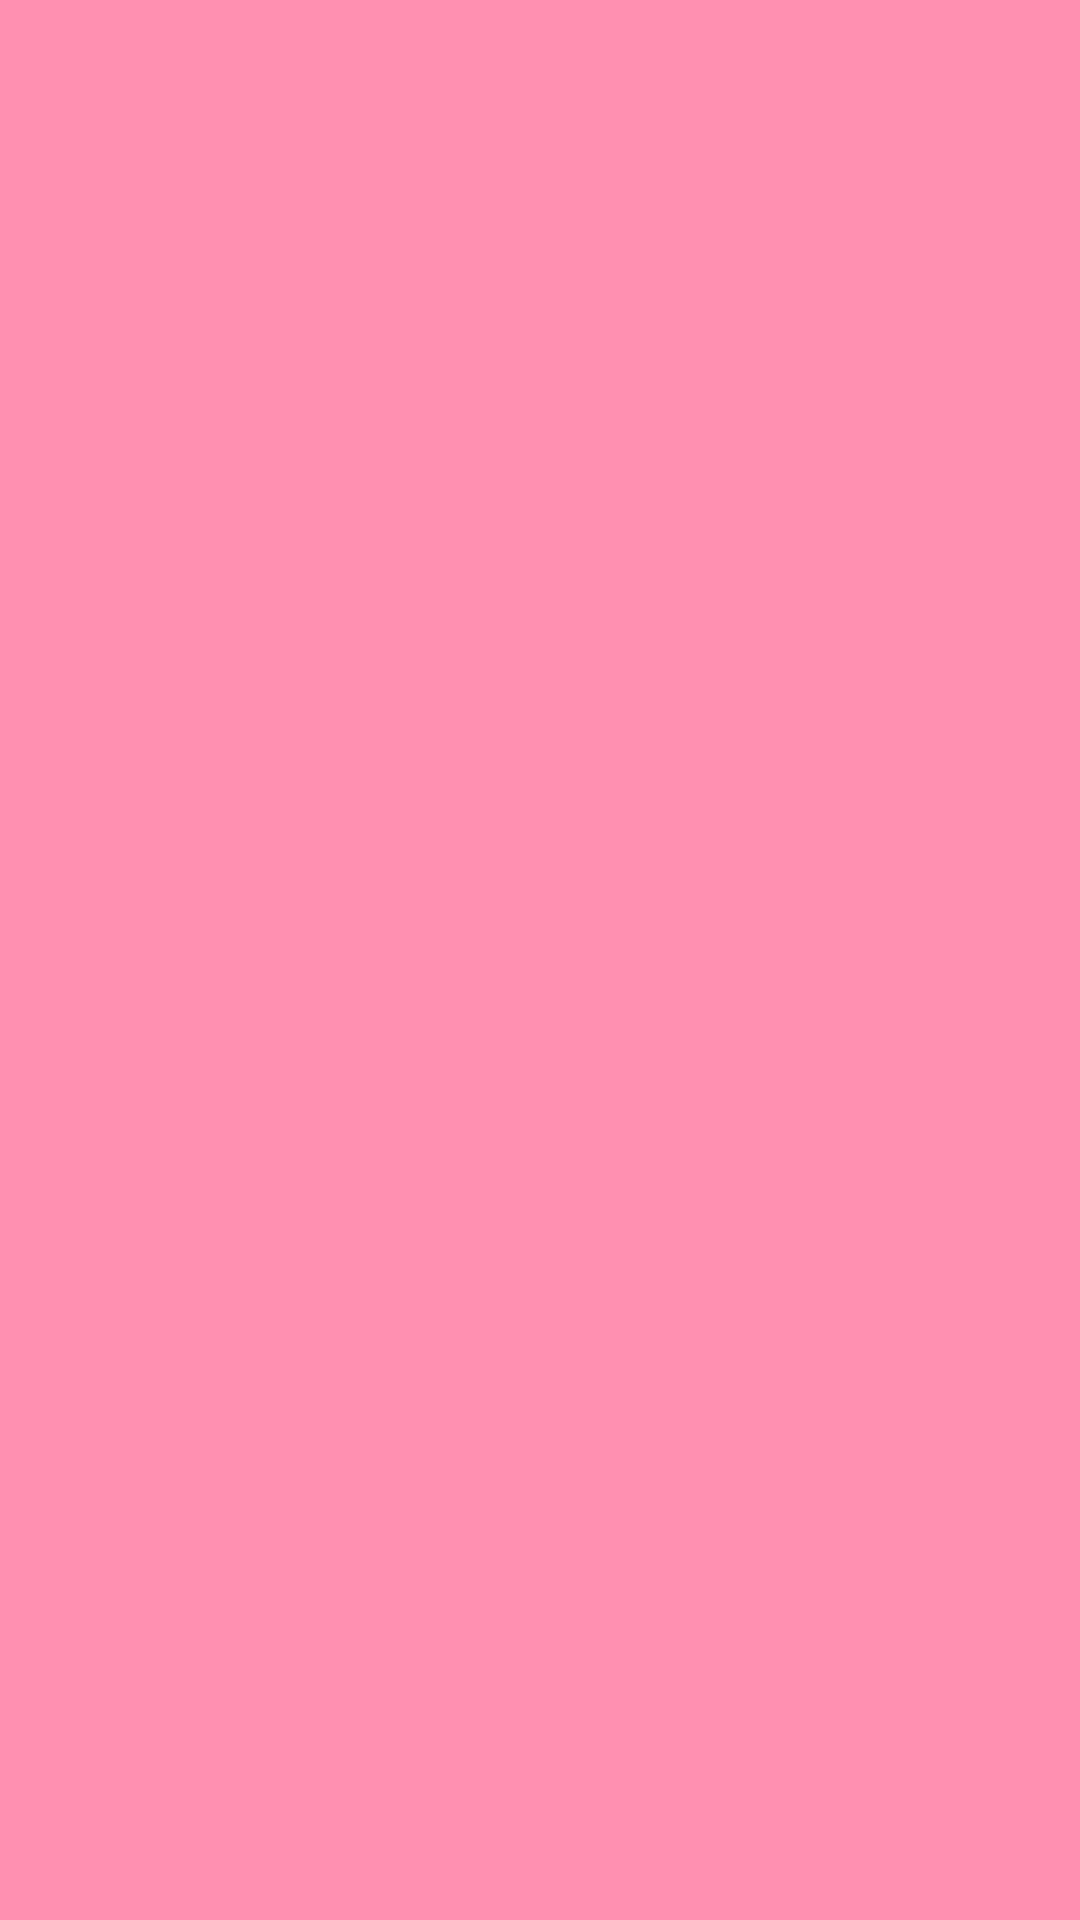 Rose Pink Solid Color Phone Wallpaper